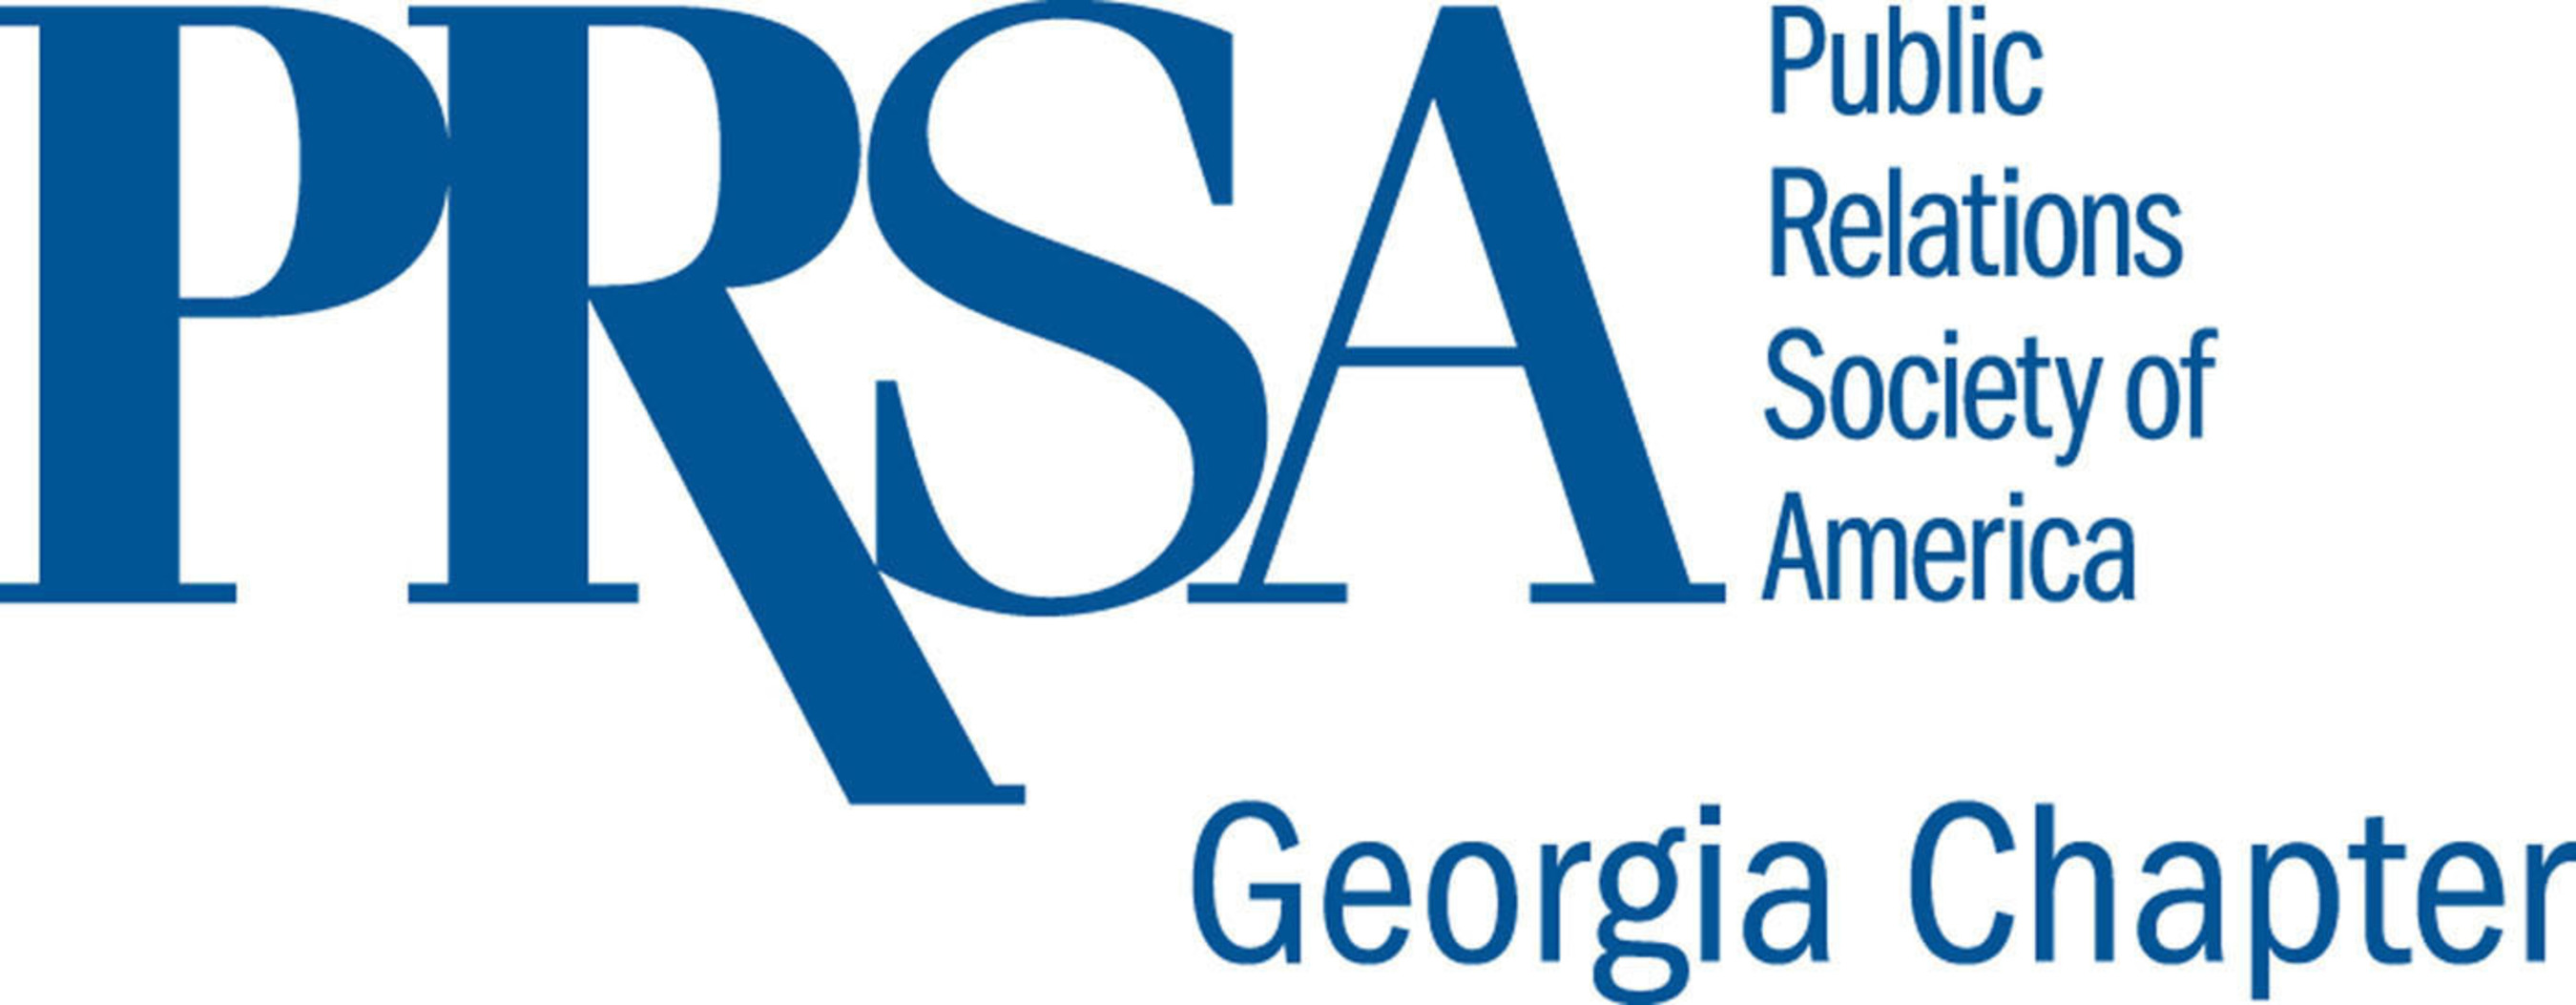 New 2012 Georgia Chapter PRSA logo.